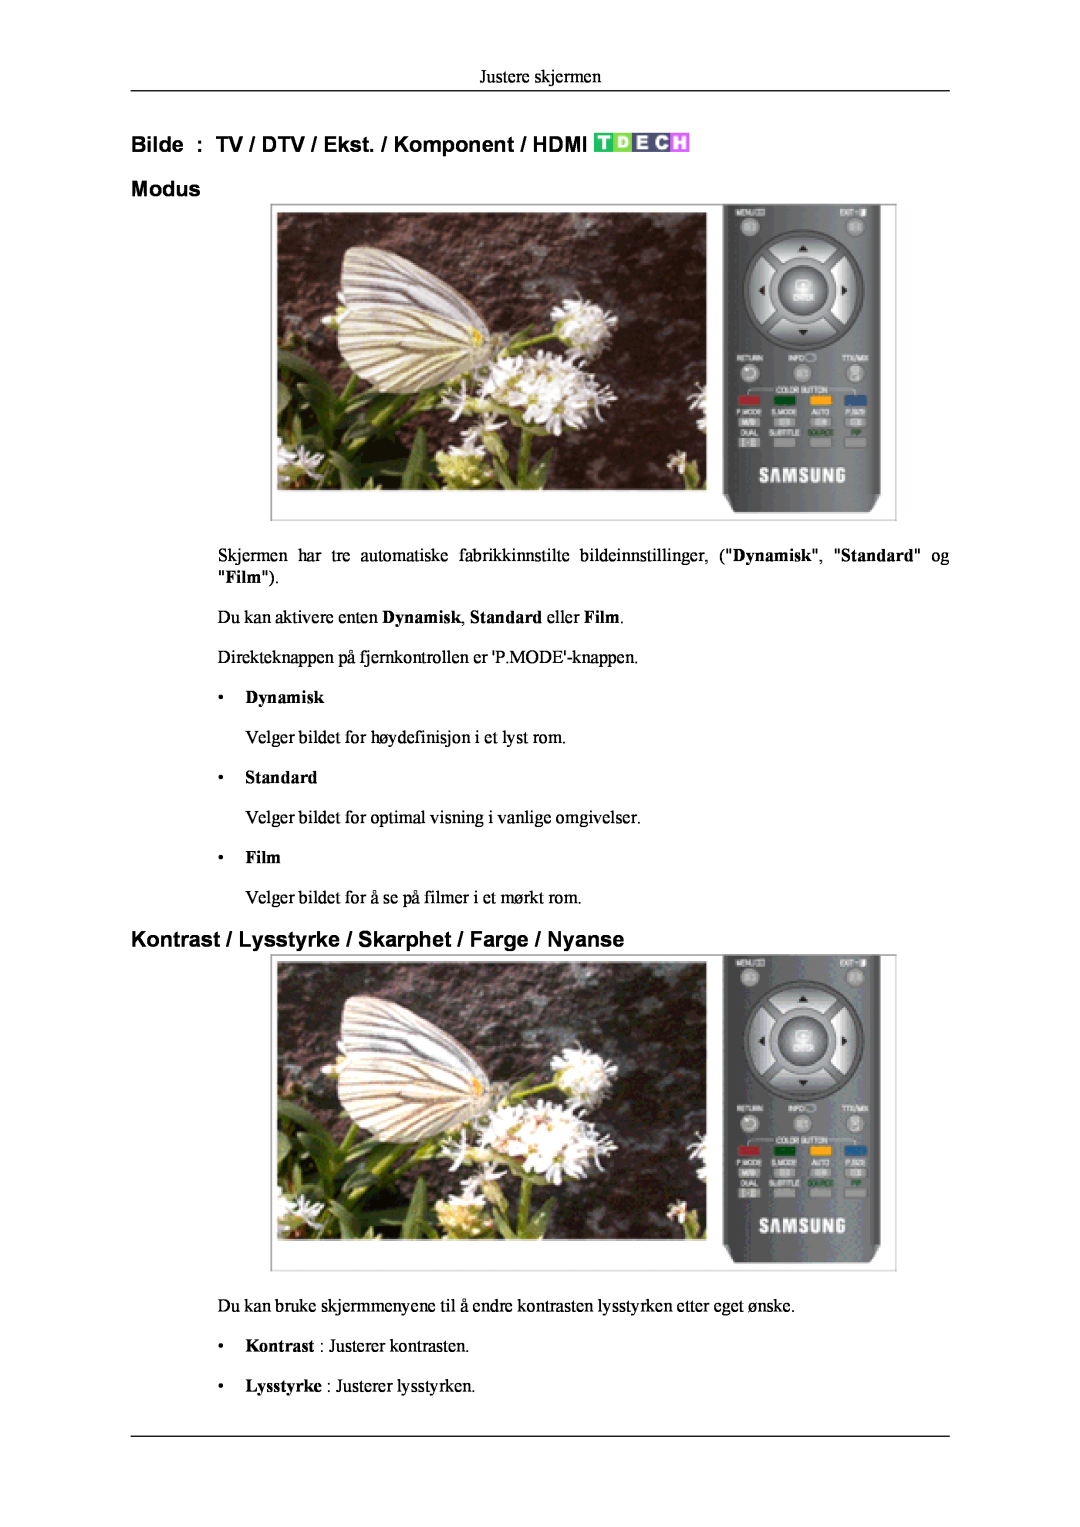 Samsung LS20TDVSUV/EN Bilde TV / DTV / Ekst. / Komponent / HDMI Modus, Kontrast / Lysstyrke / Skarphet / Farge / Nyanse 